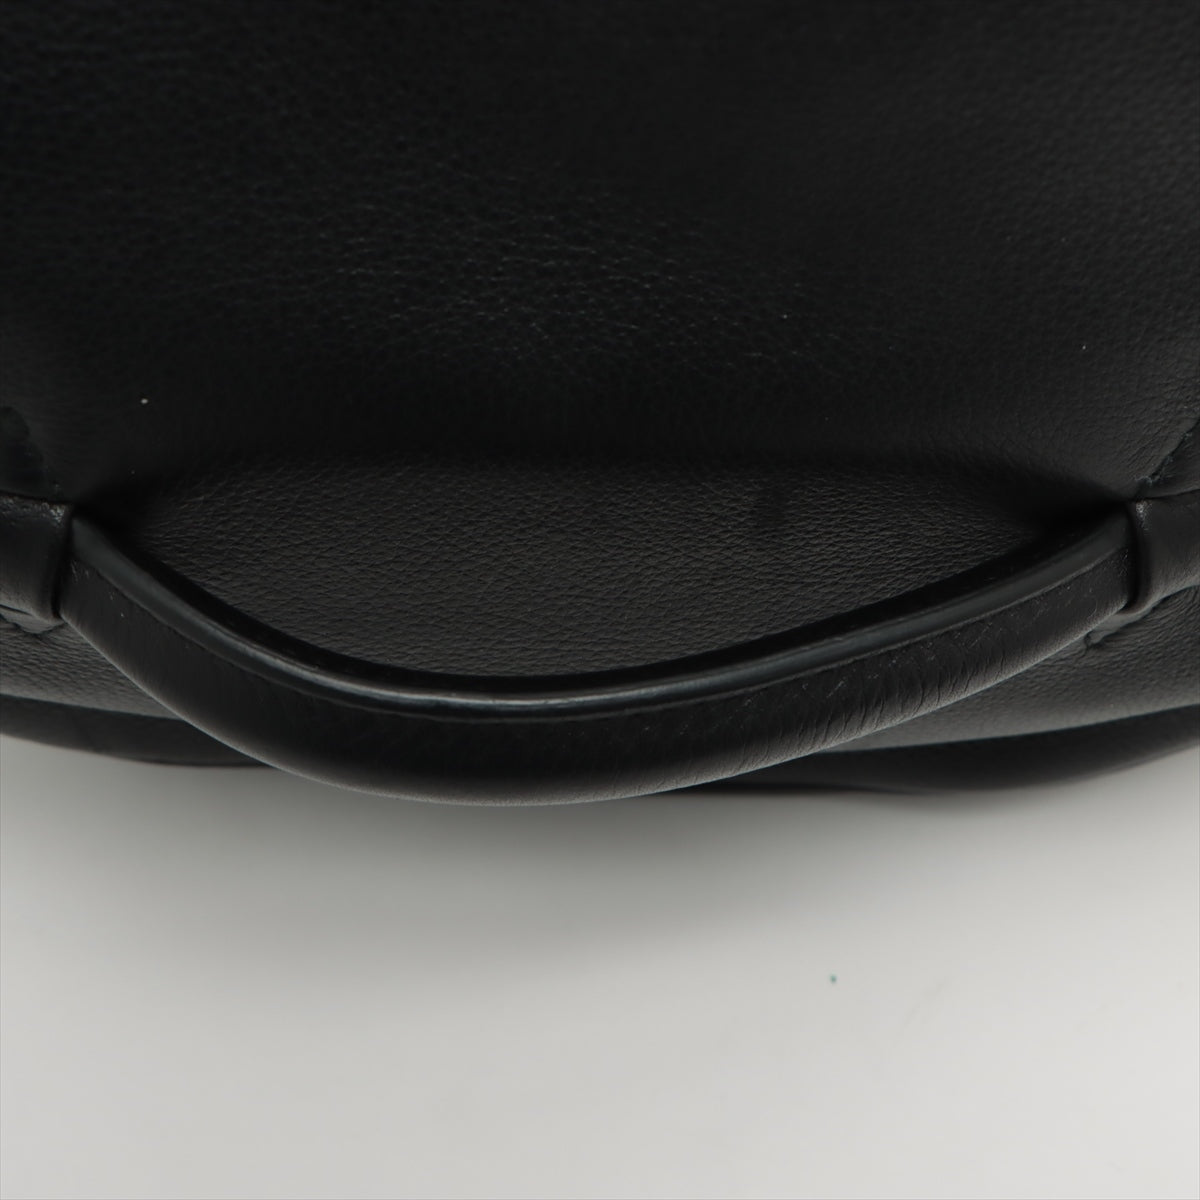 Balenciaga Leather Shoulder bag Black 319797